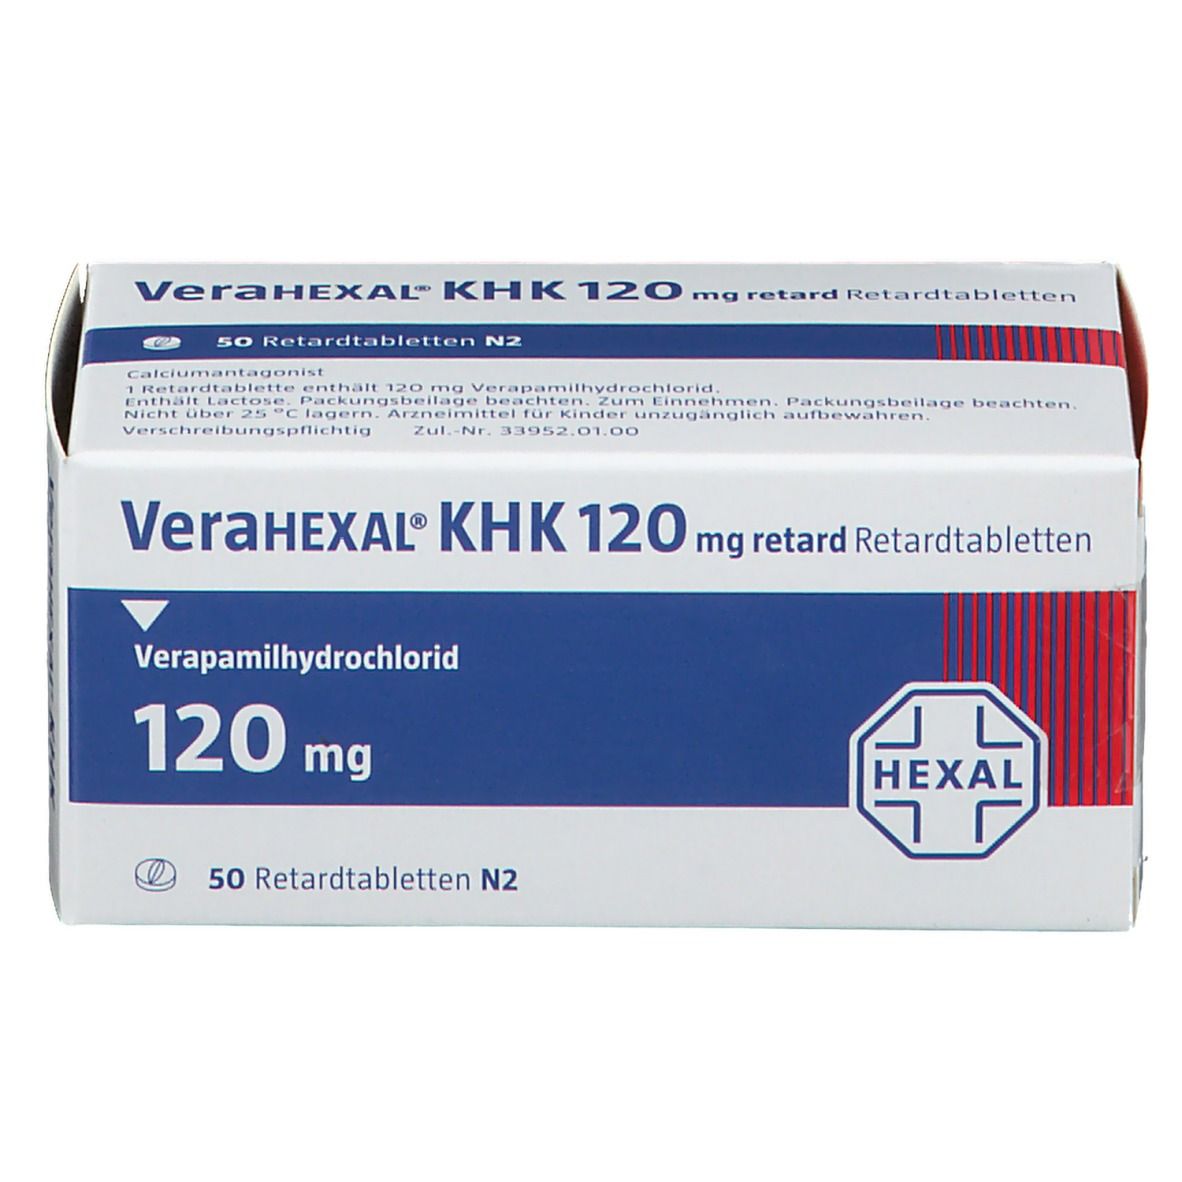 VeraHEXAL® KHK 120 mg retard